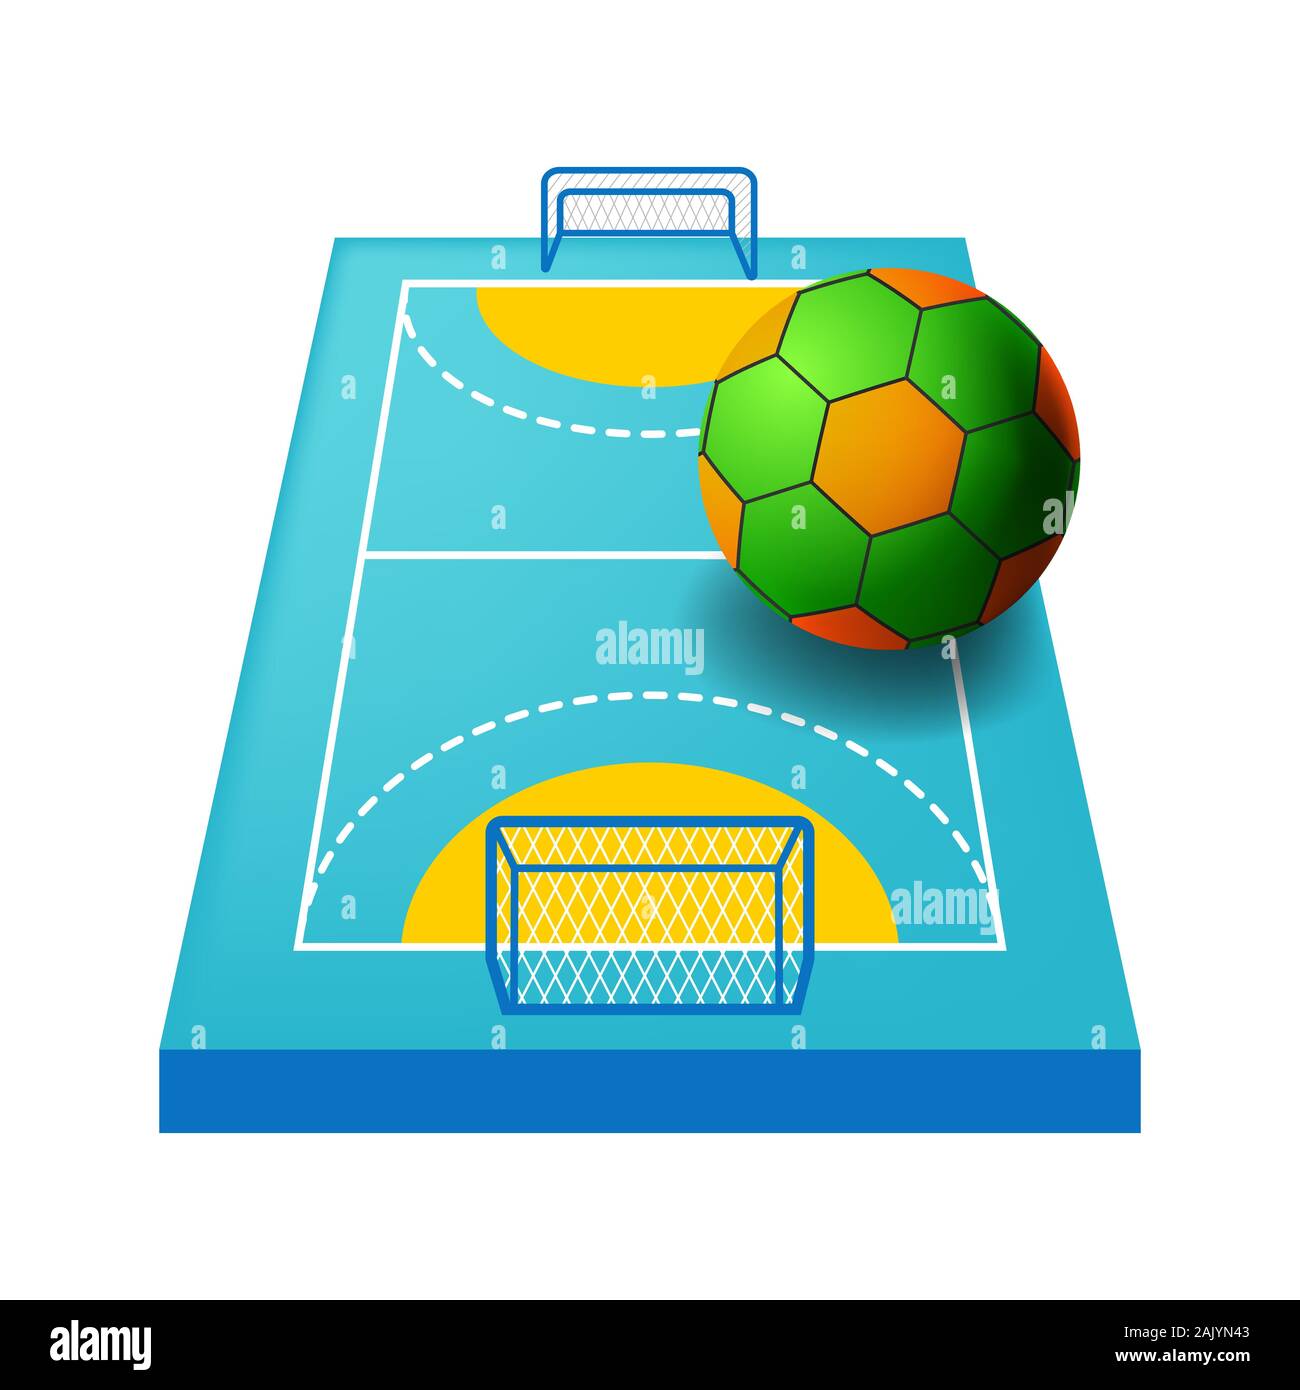 Indoor-Feld für Handball isoliert Symbol, Spielplatz oder Kurs Stock Vektor